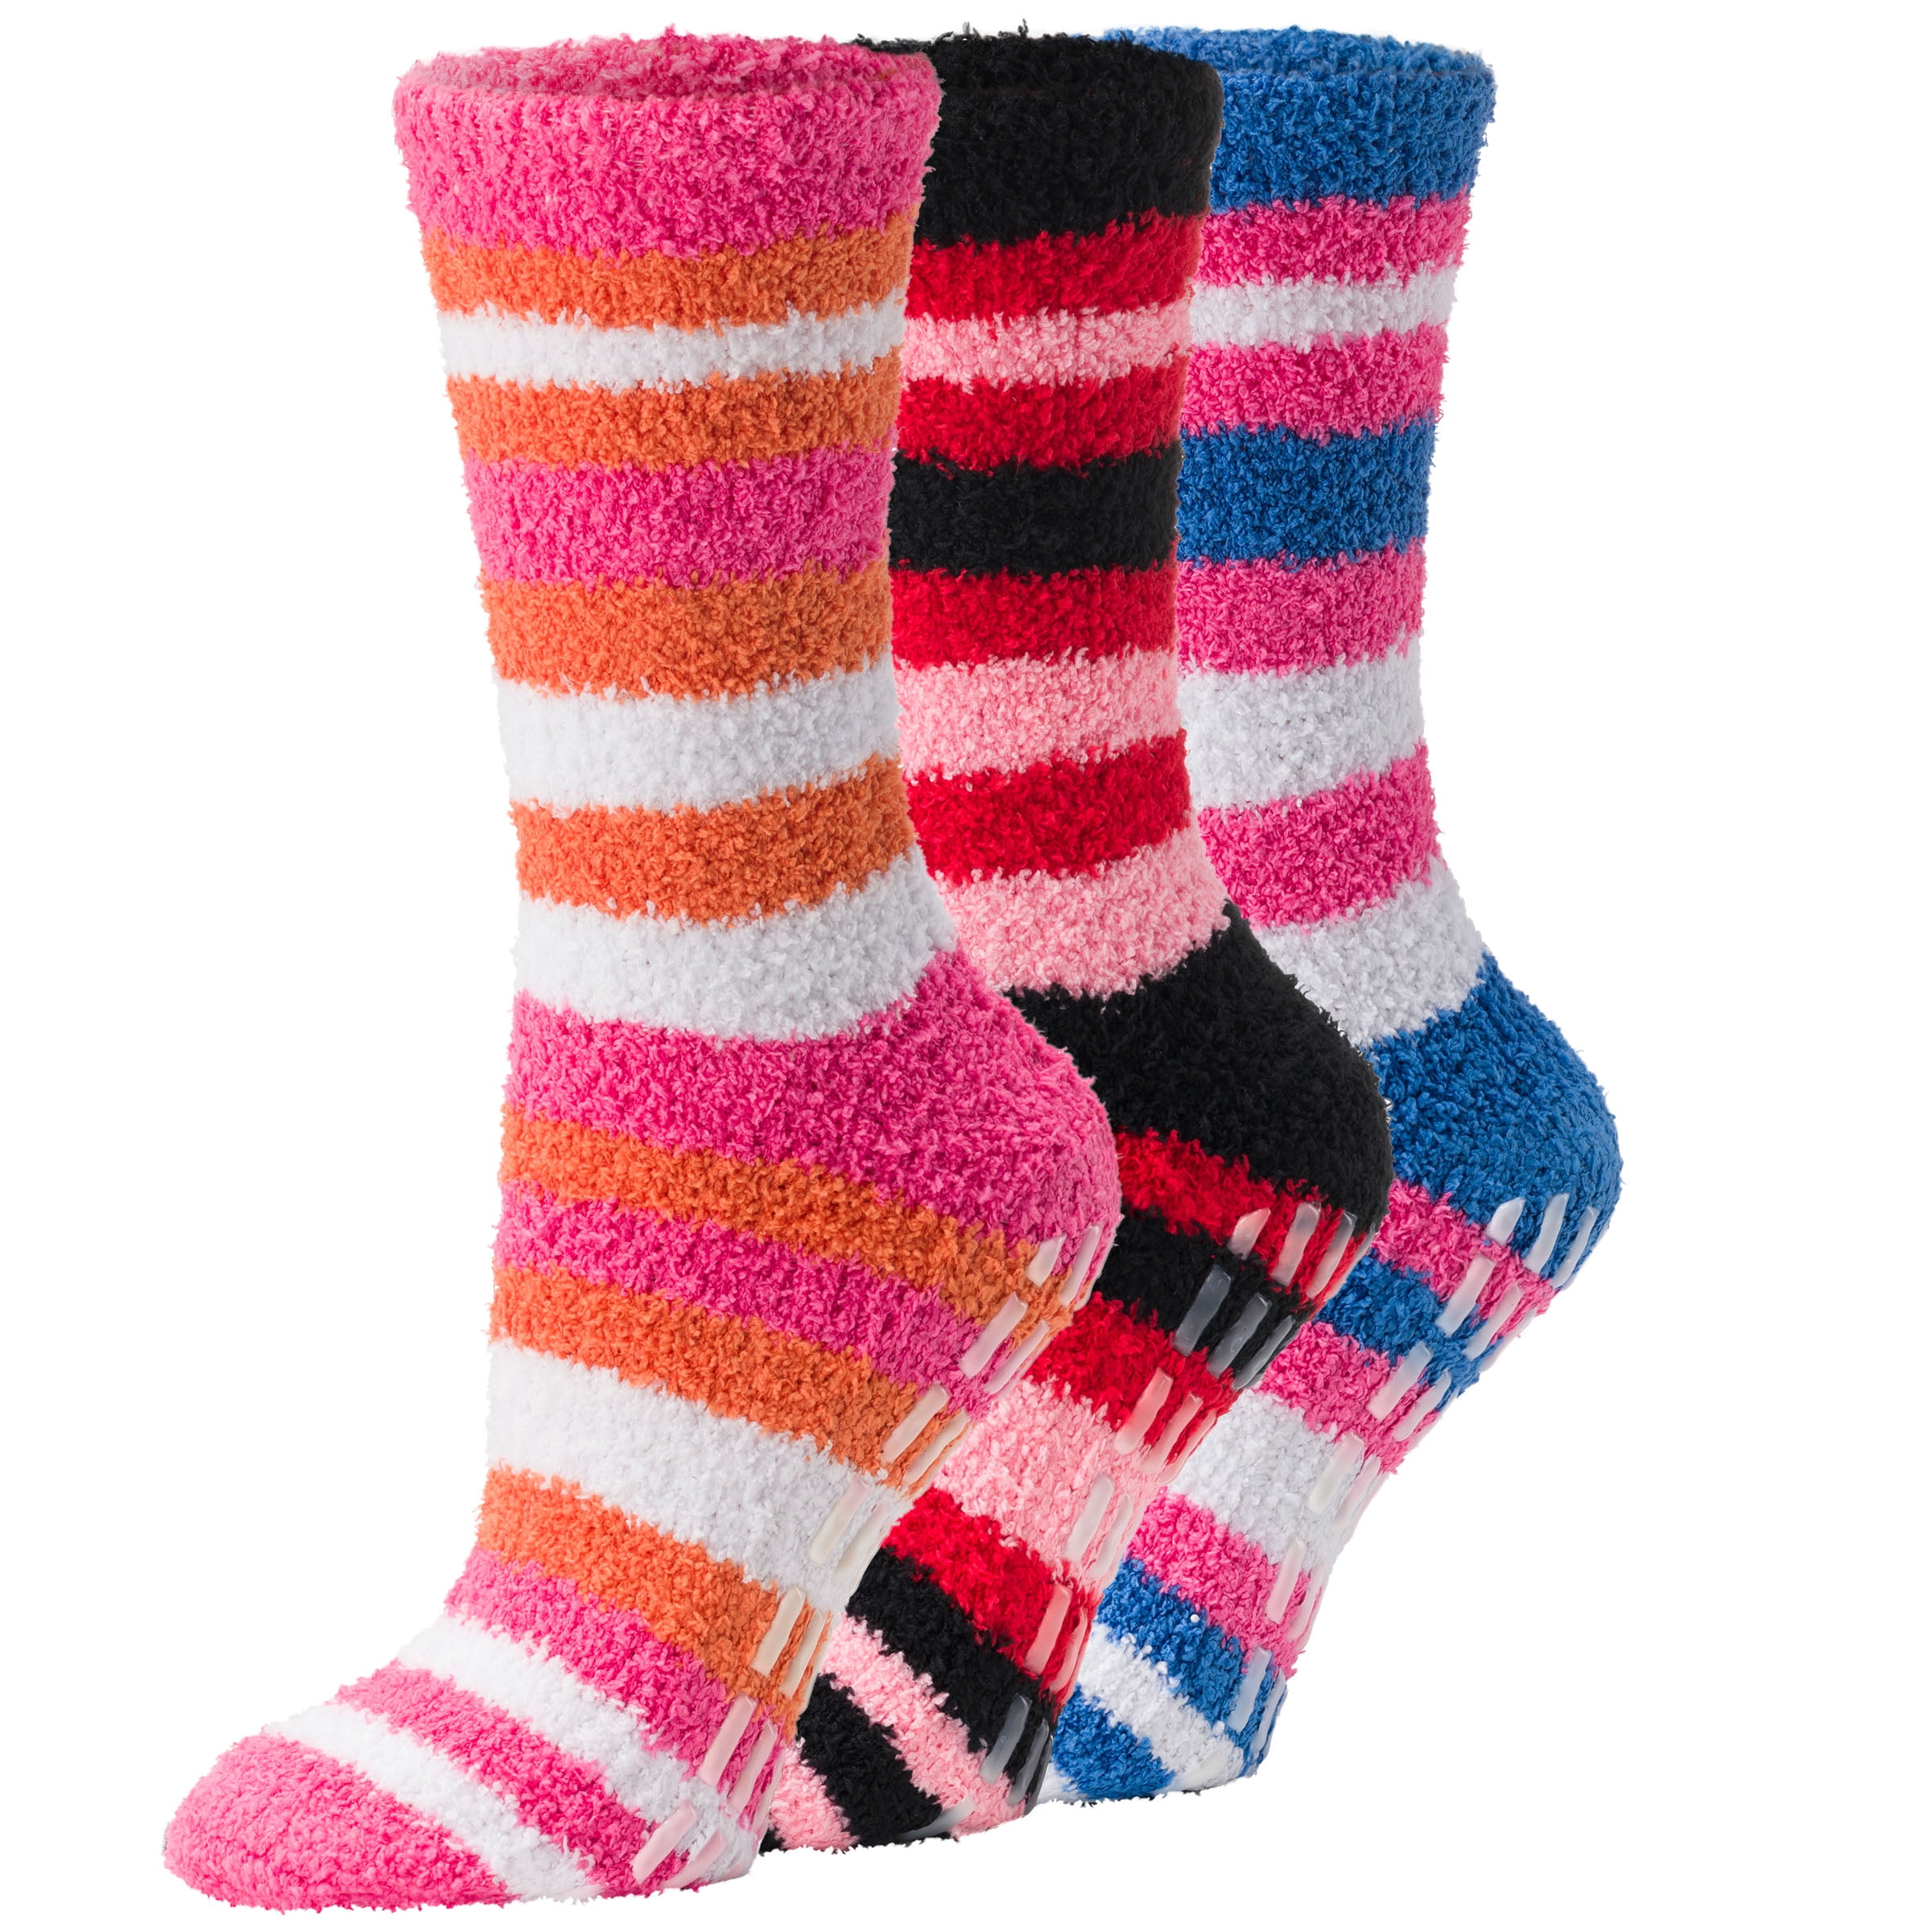 Ketyyh-chn99 Slippers for Girls Women's Sports Non Slip Bottom Socks  Stretchy Cotton Socks Casual Socks for Summer Hot Pink,One Size 